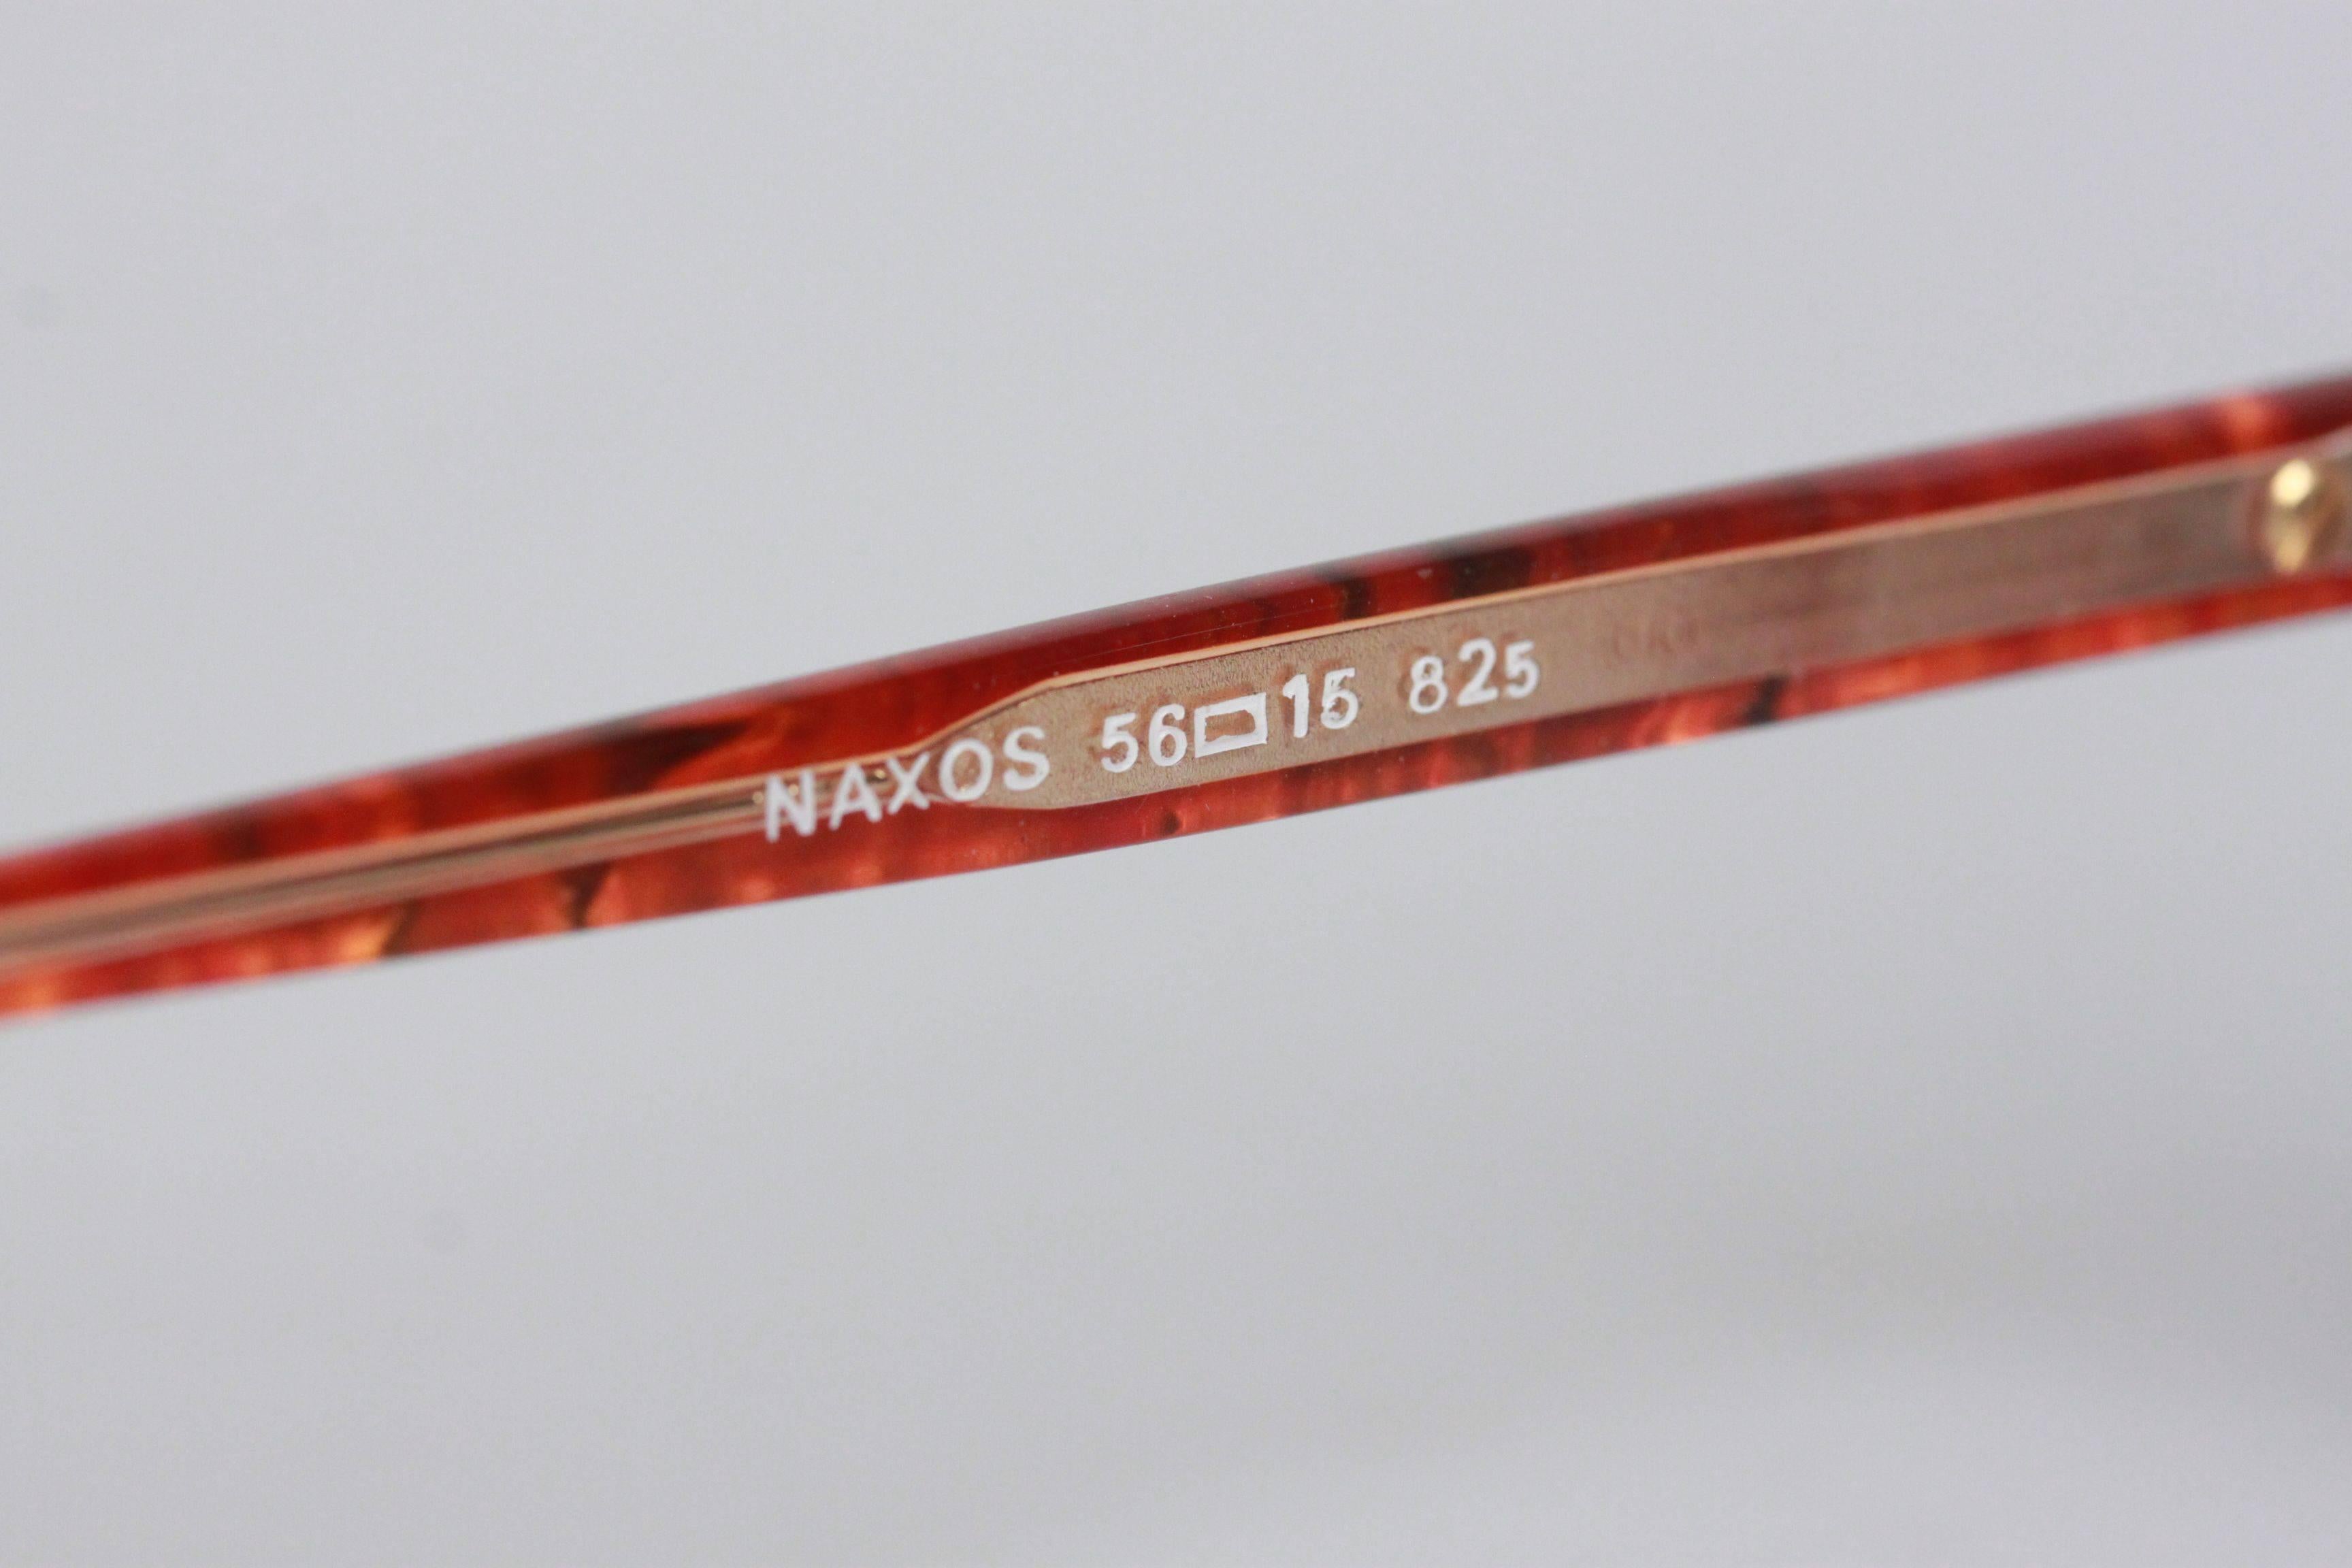 YVES SAINT LAURENT Vintage Marbled RED MINT Sunglasses NAXOS 825 56mm 2